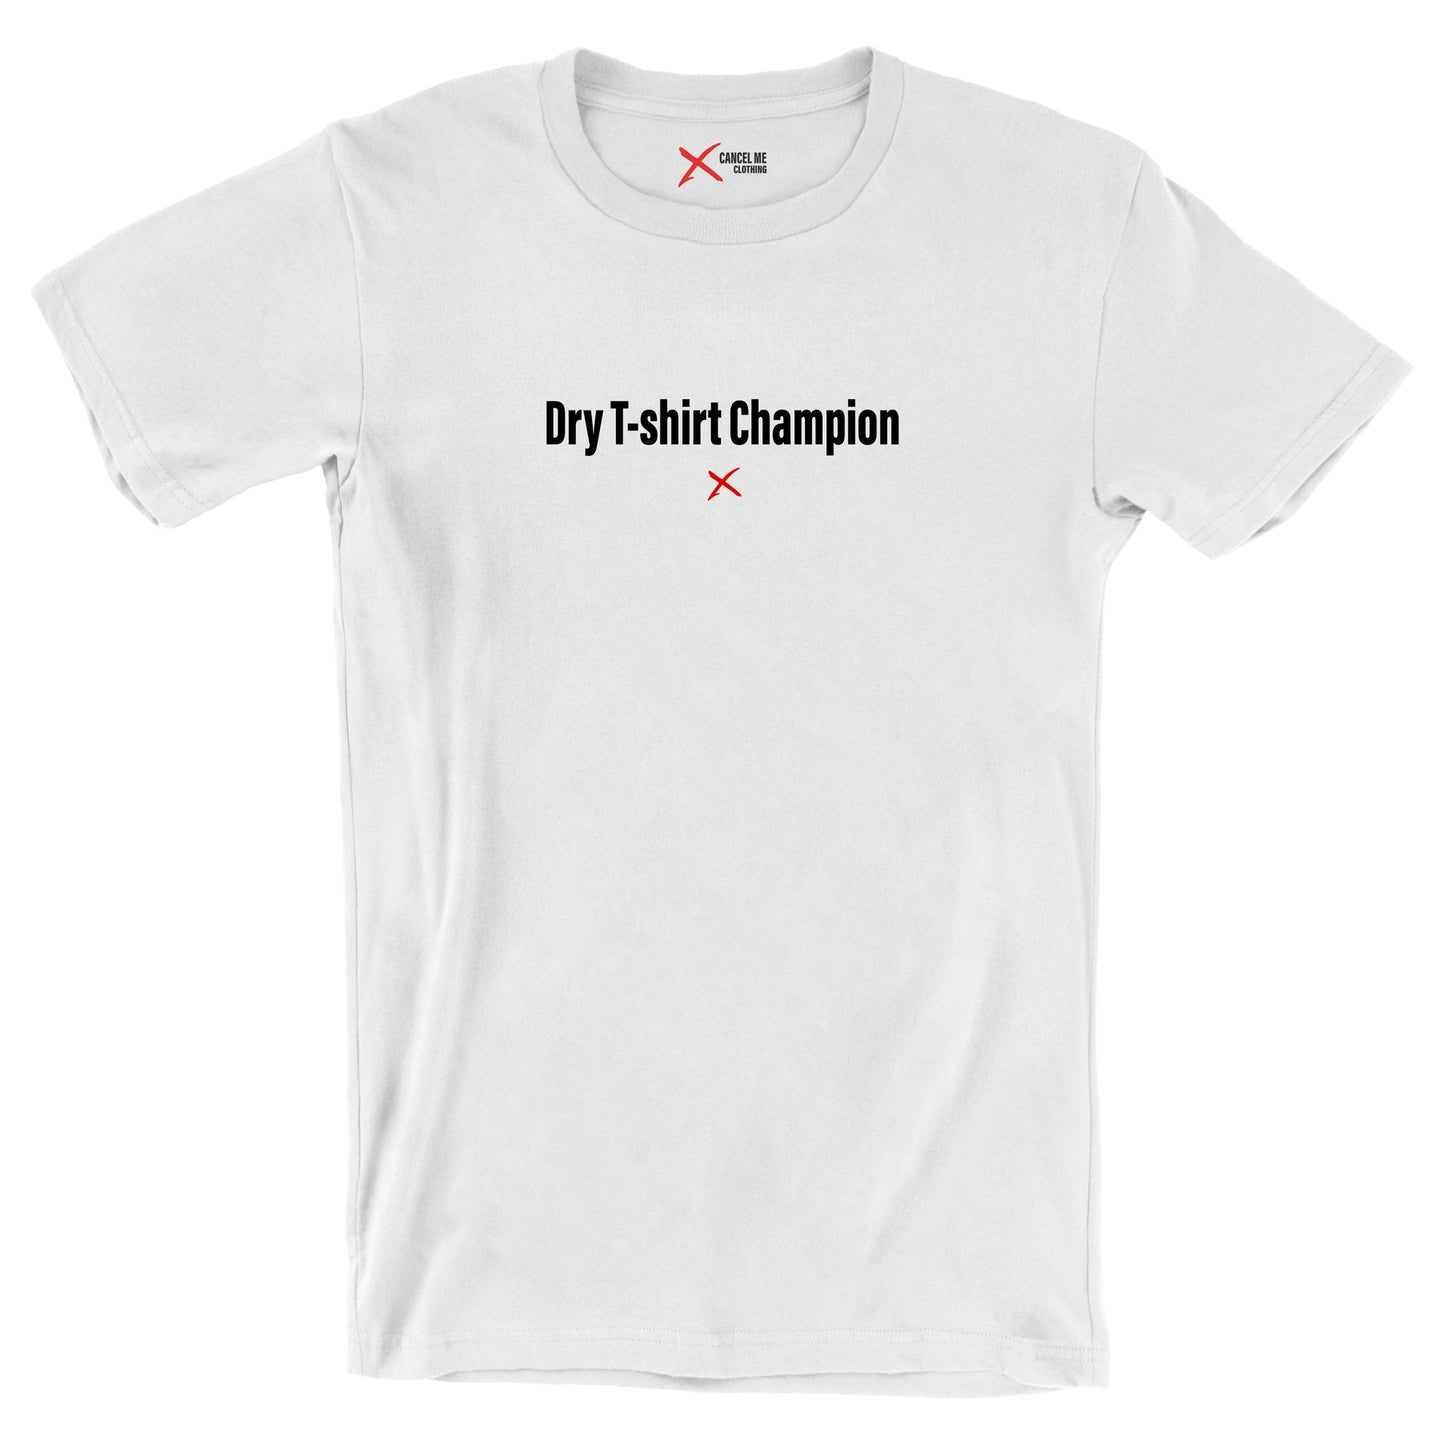 Dry T-shirt Champion - Shirt